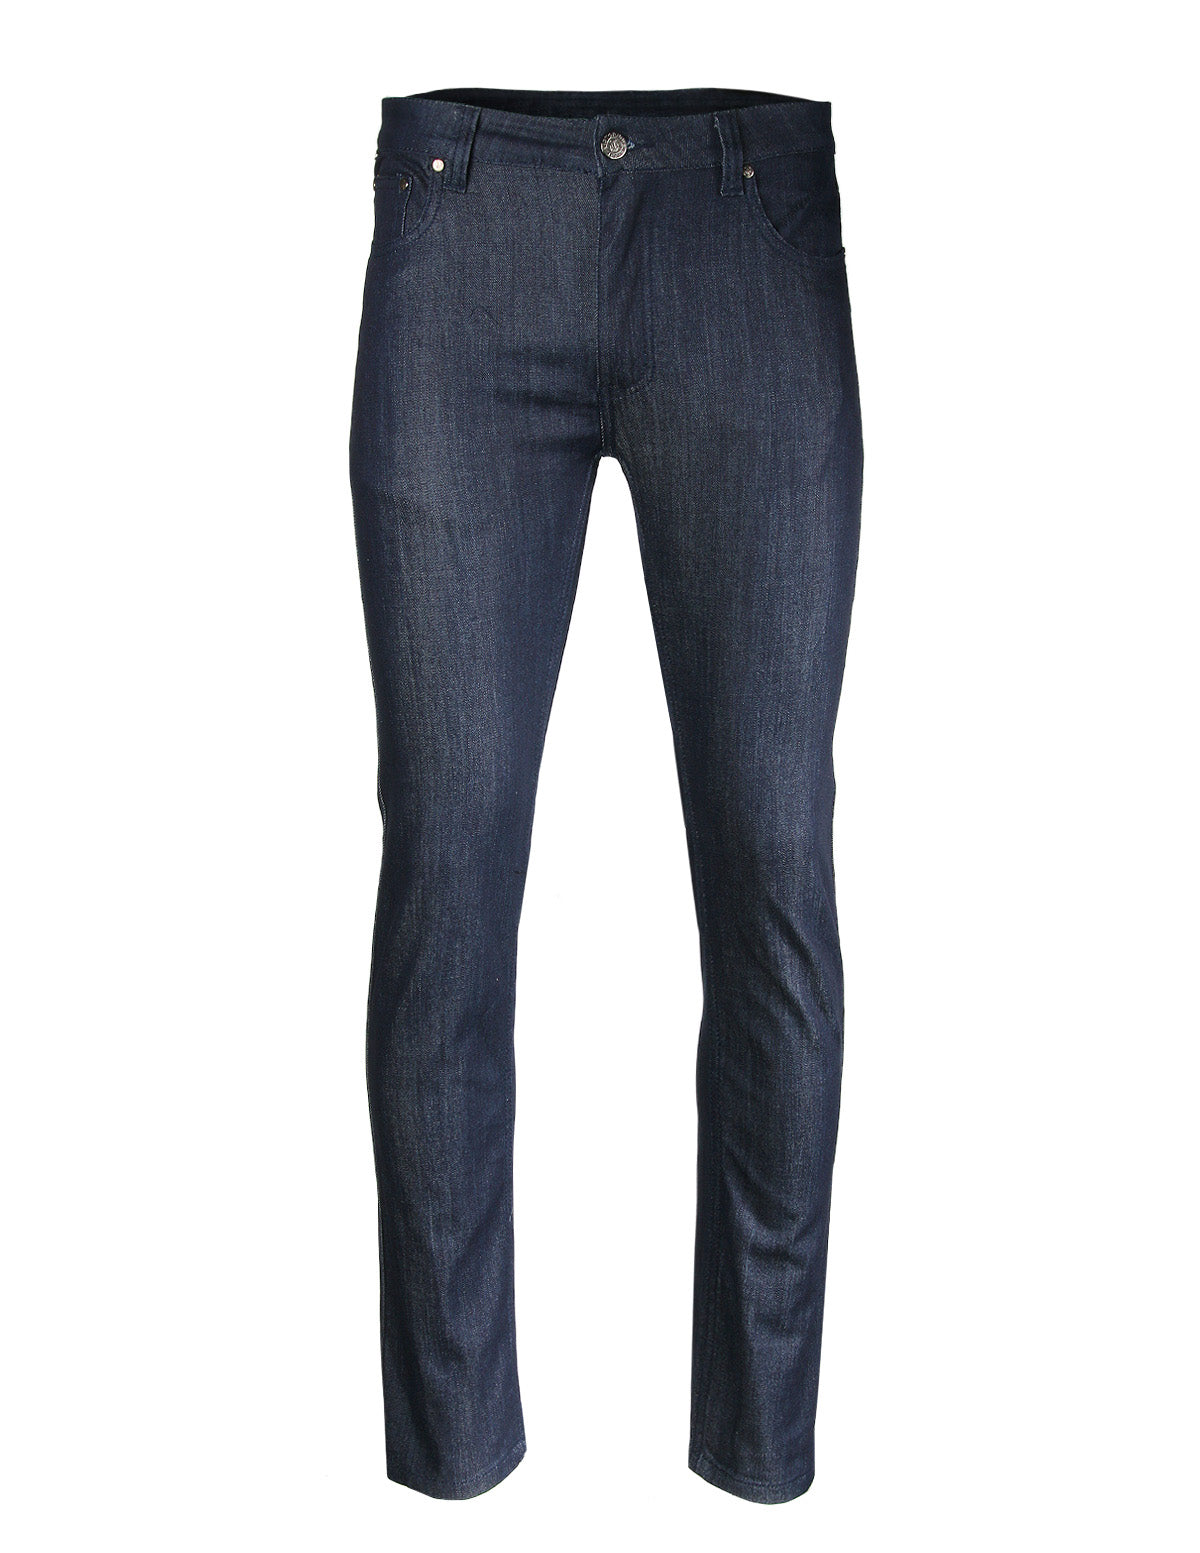 Men's elastic dark blue Denim trousers with zipper and button